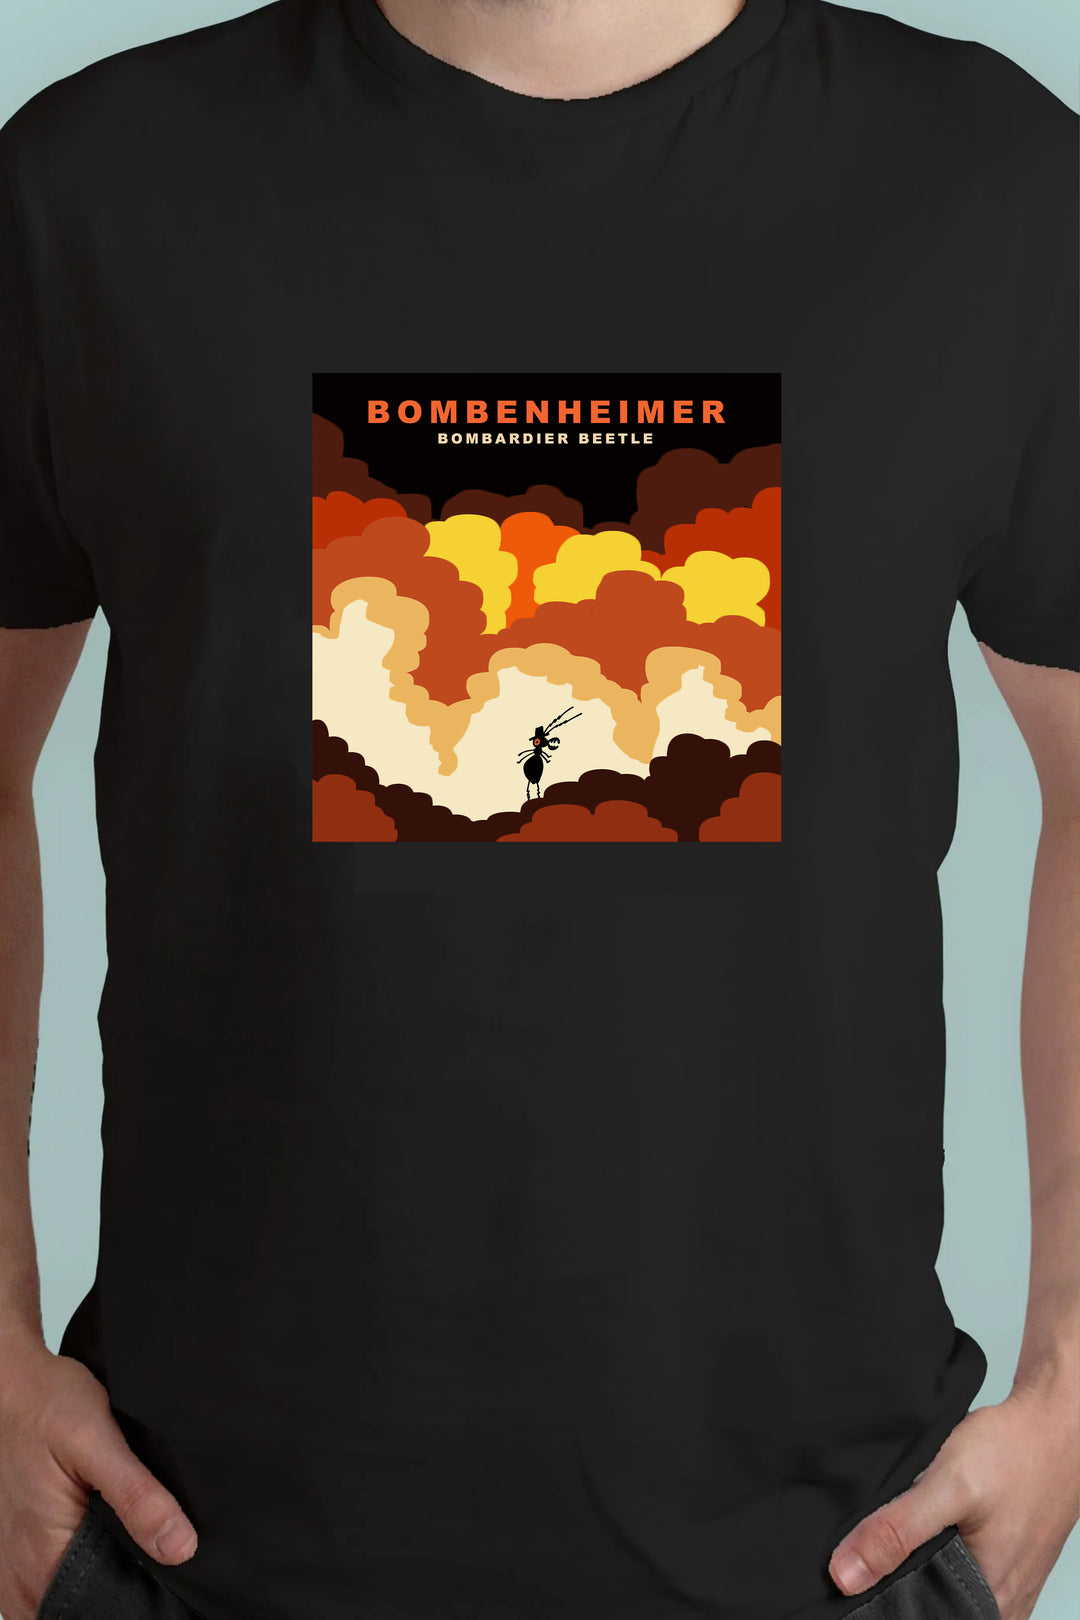 Bombenheimer Bombardier Beetle T-Shirt